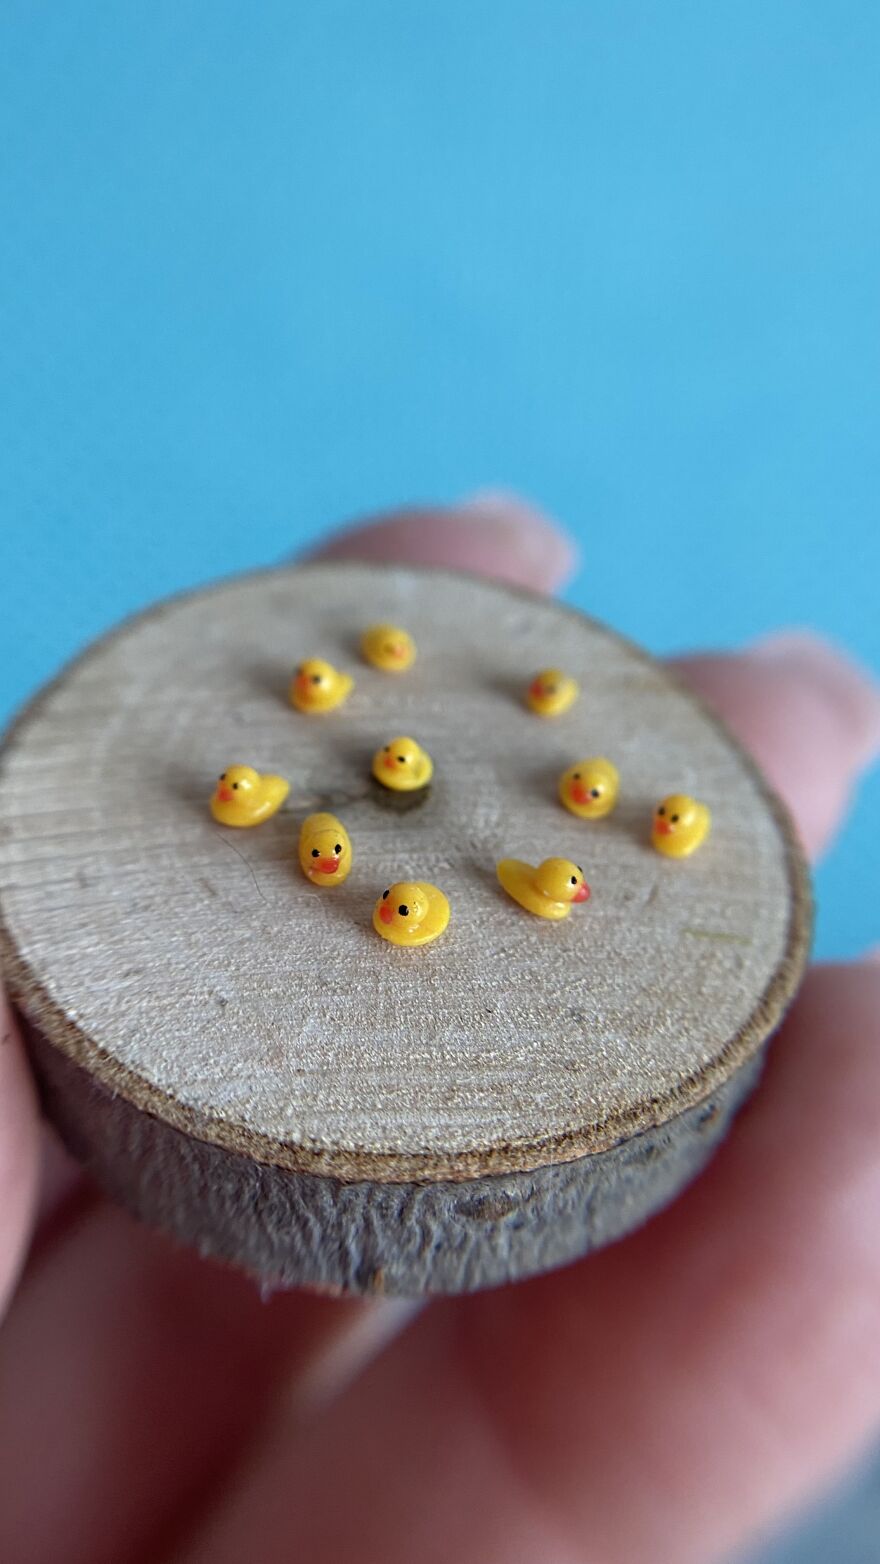 I Create Tiny Worlds Inside Walnut Shells (21 Pics)